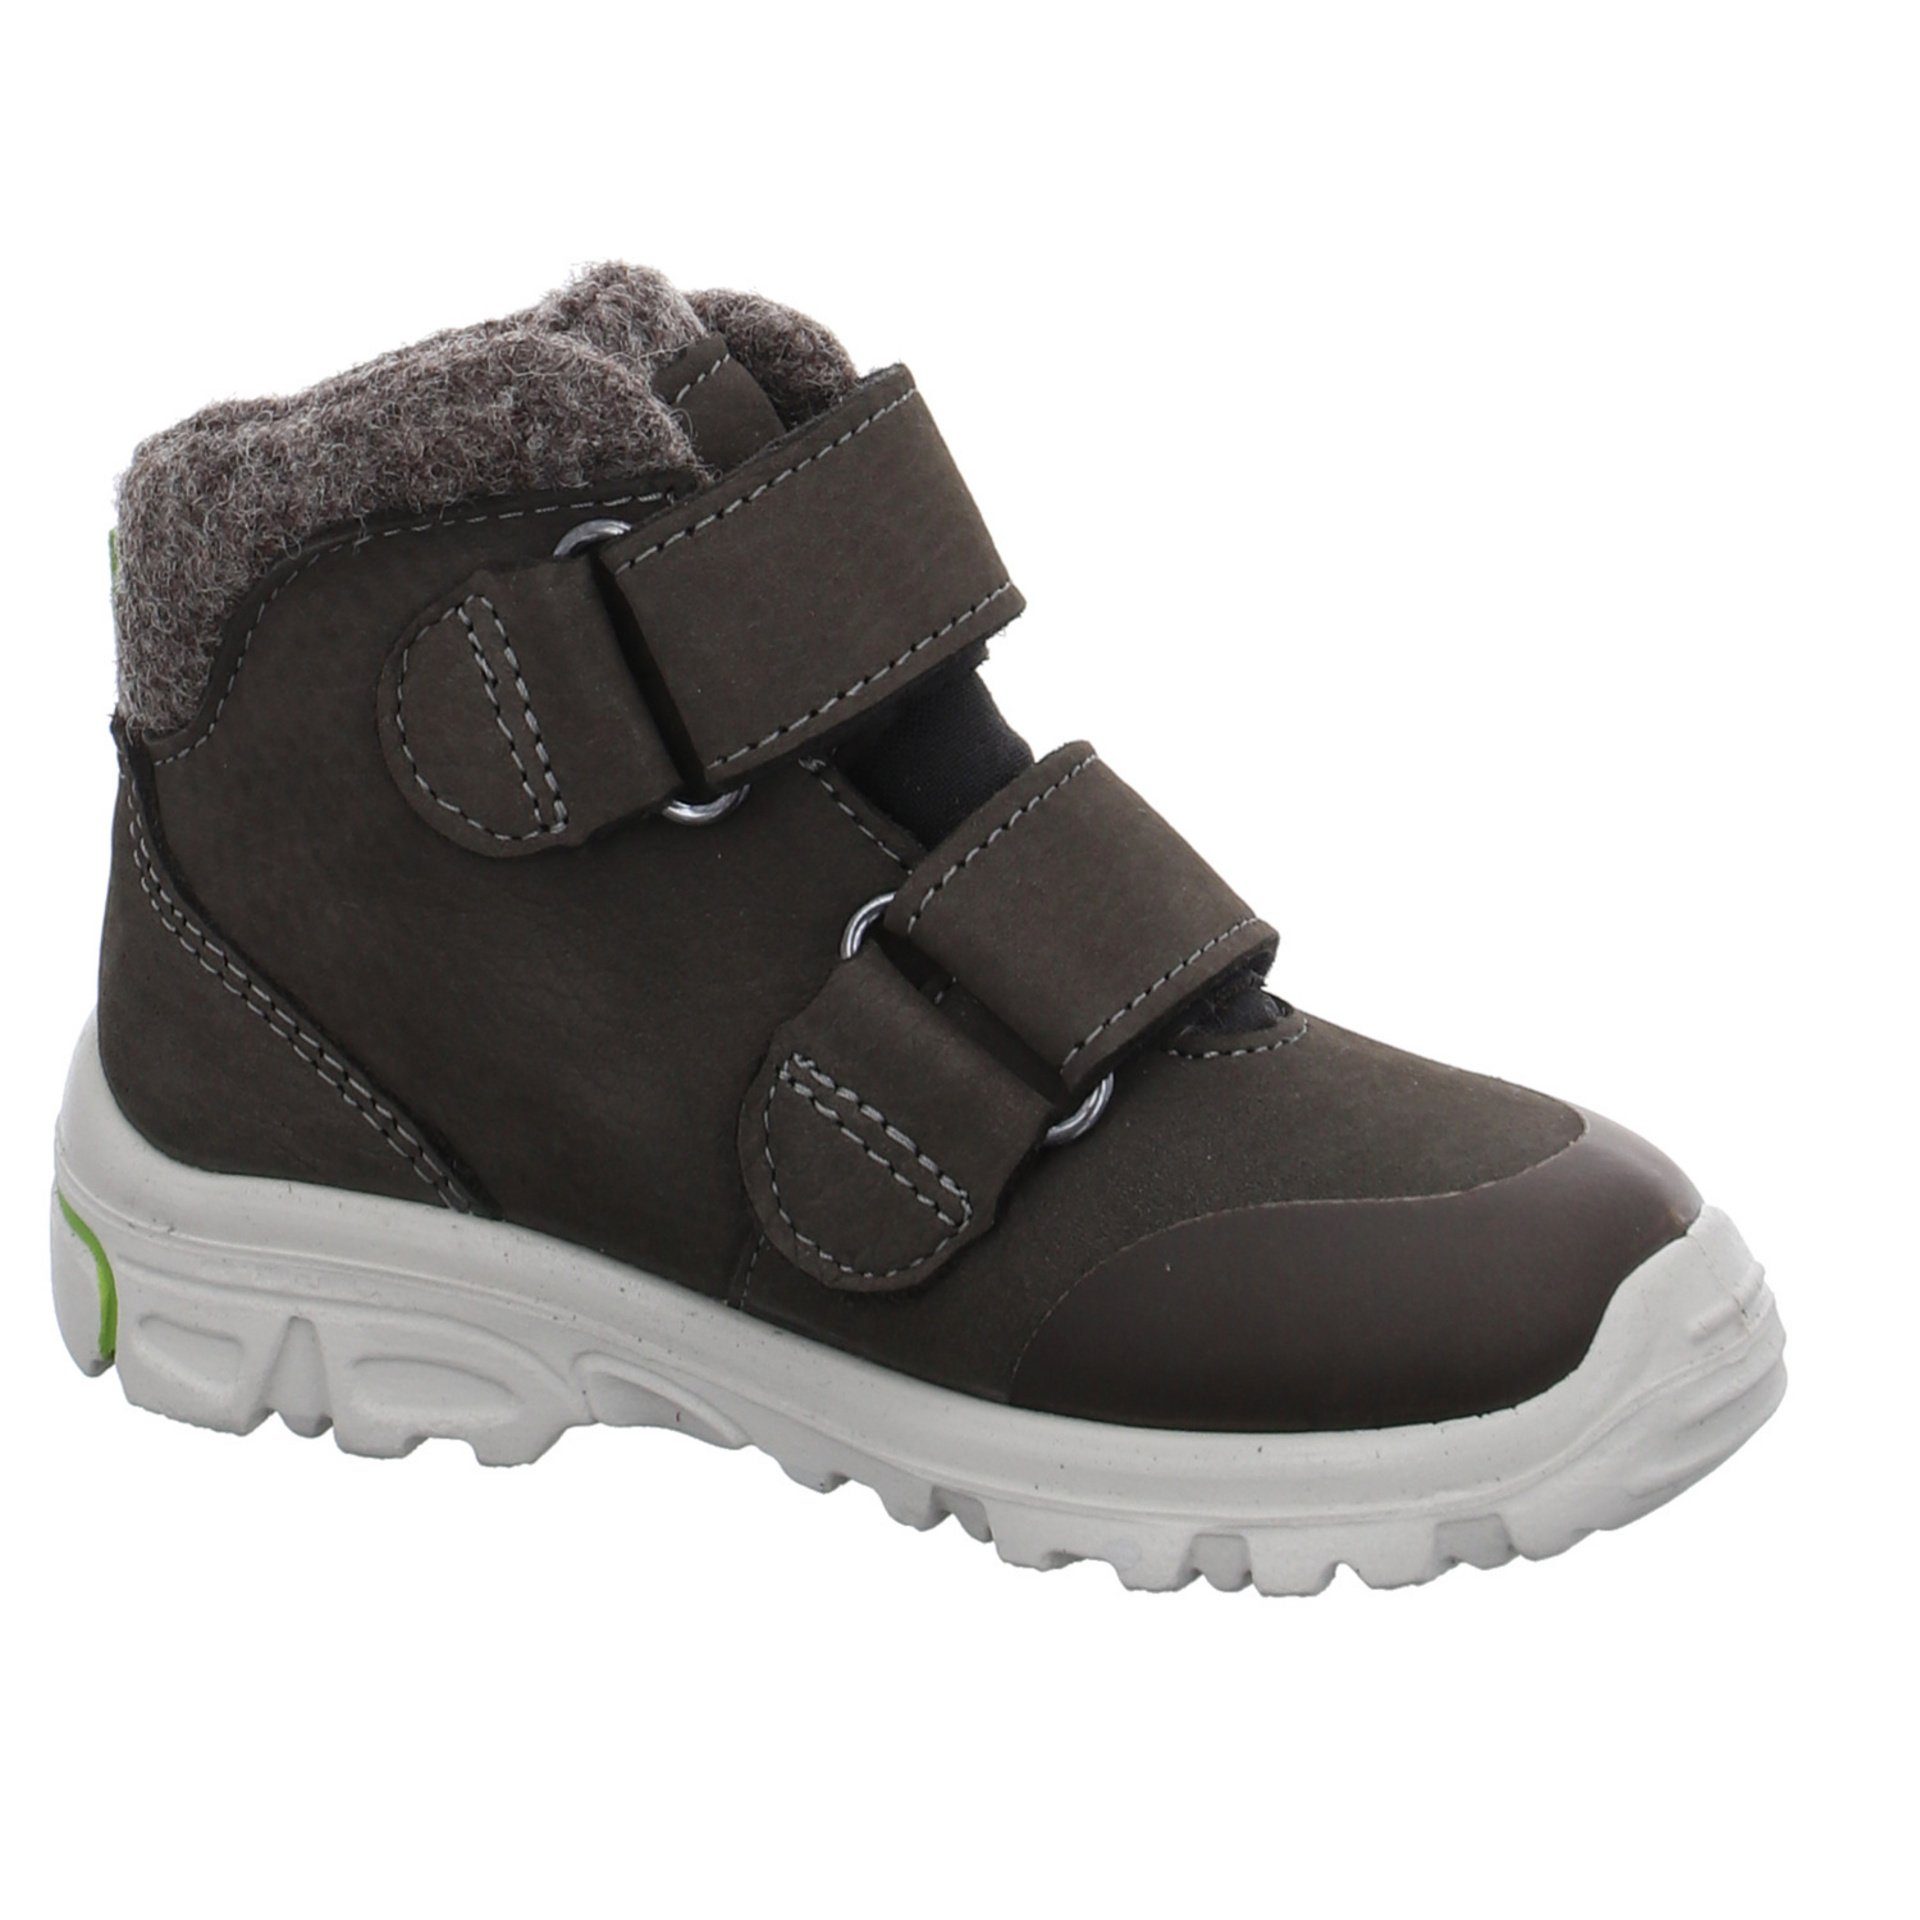 Lauflernschuhe Dario Pepino Ricosta Baby Leder-/Textilkombination Boots Krabbelschuhe timo Lauflernschuh